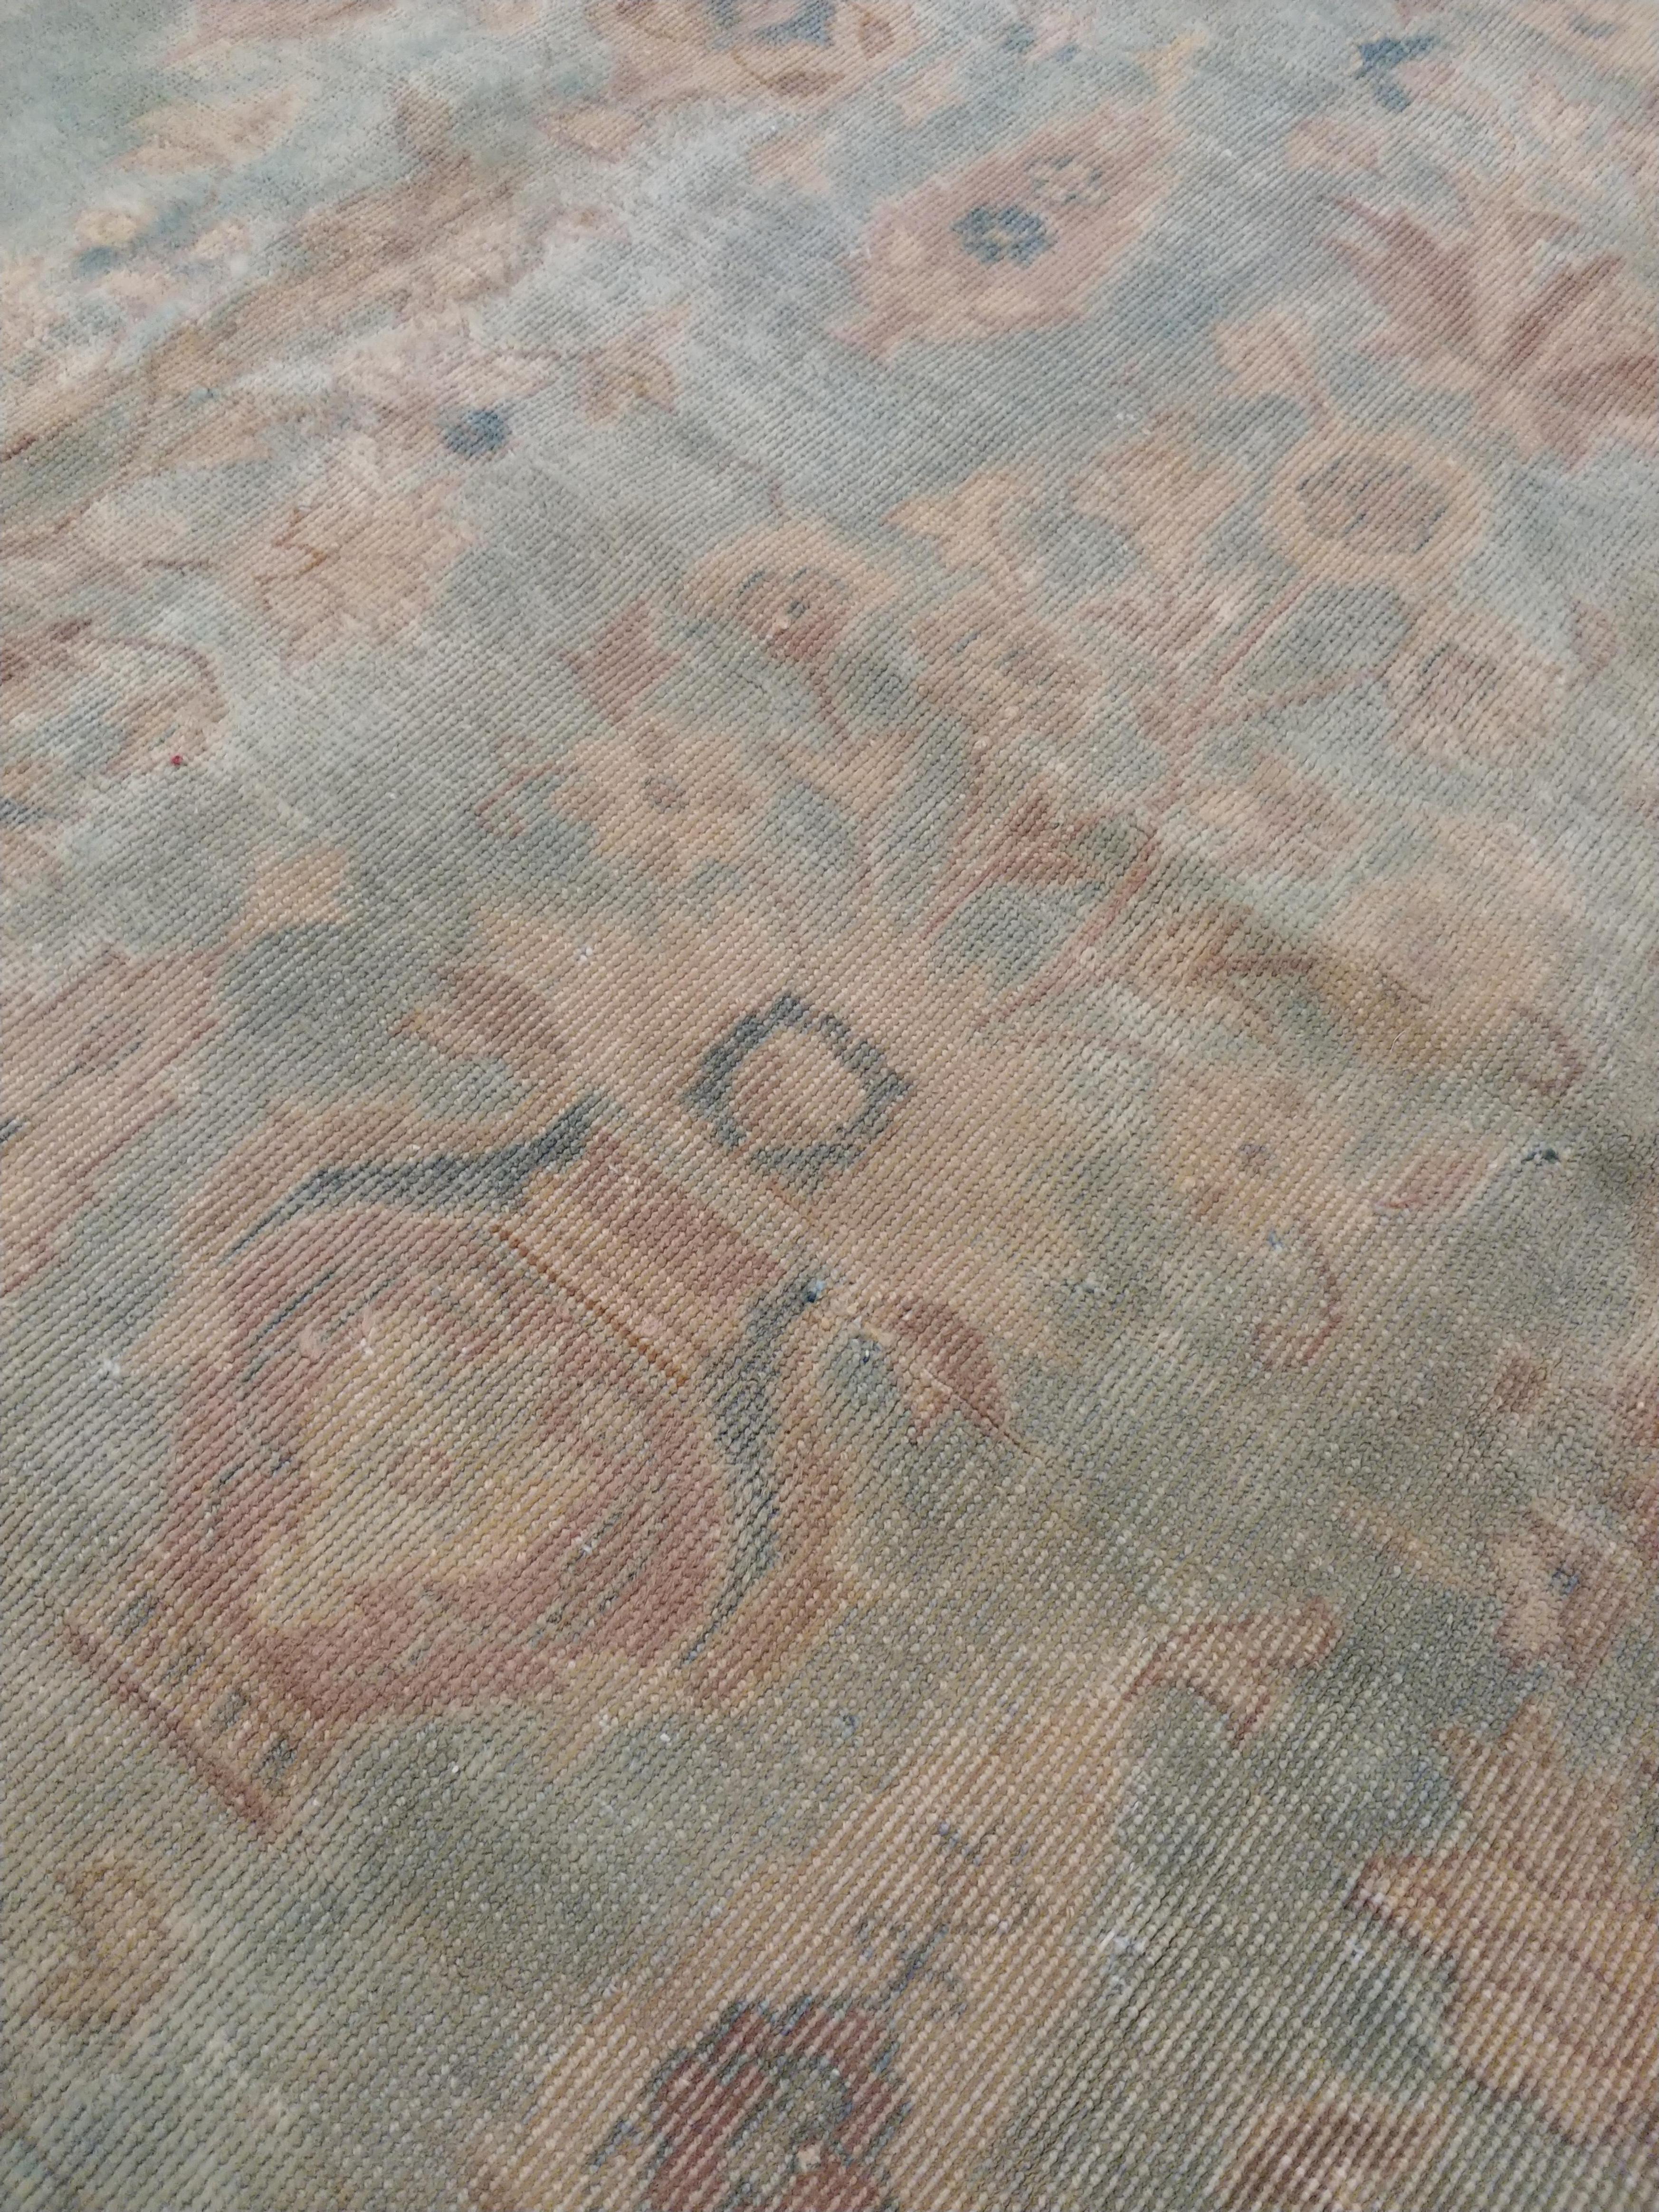 Antique Indian Agra Carpet, Handmade Rug, Green - Blue, Taupe, Beige, Allover For Sale 2